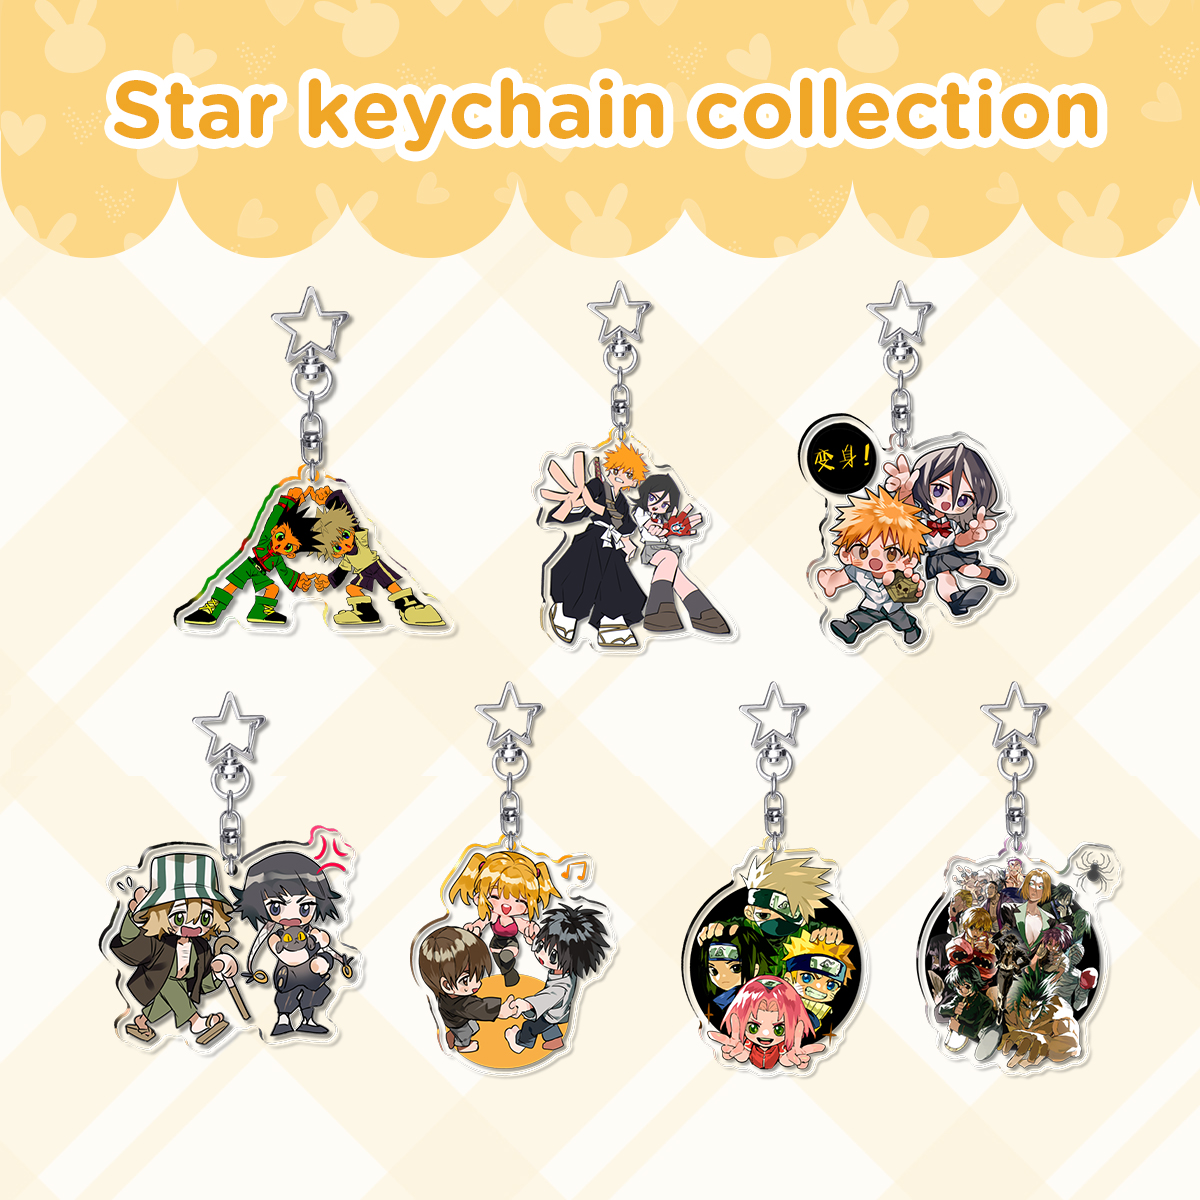 Star keychain collection